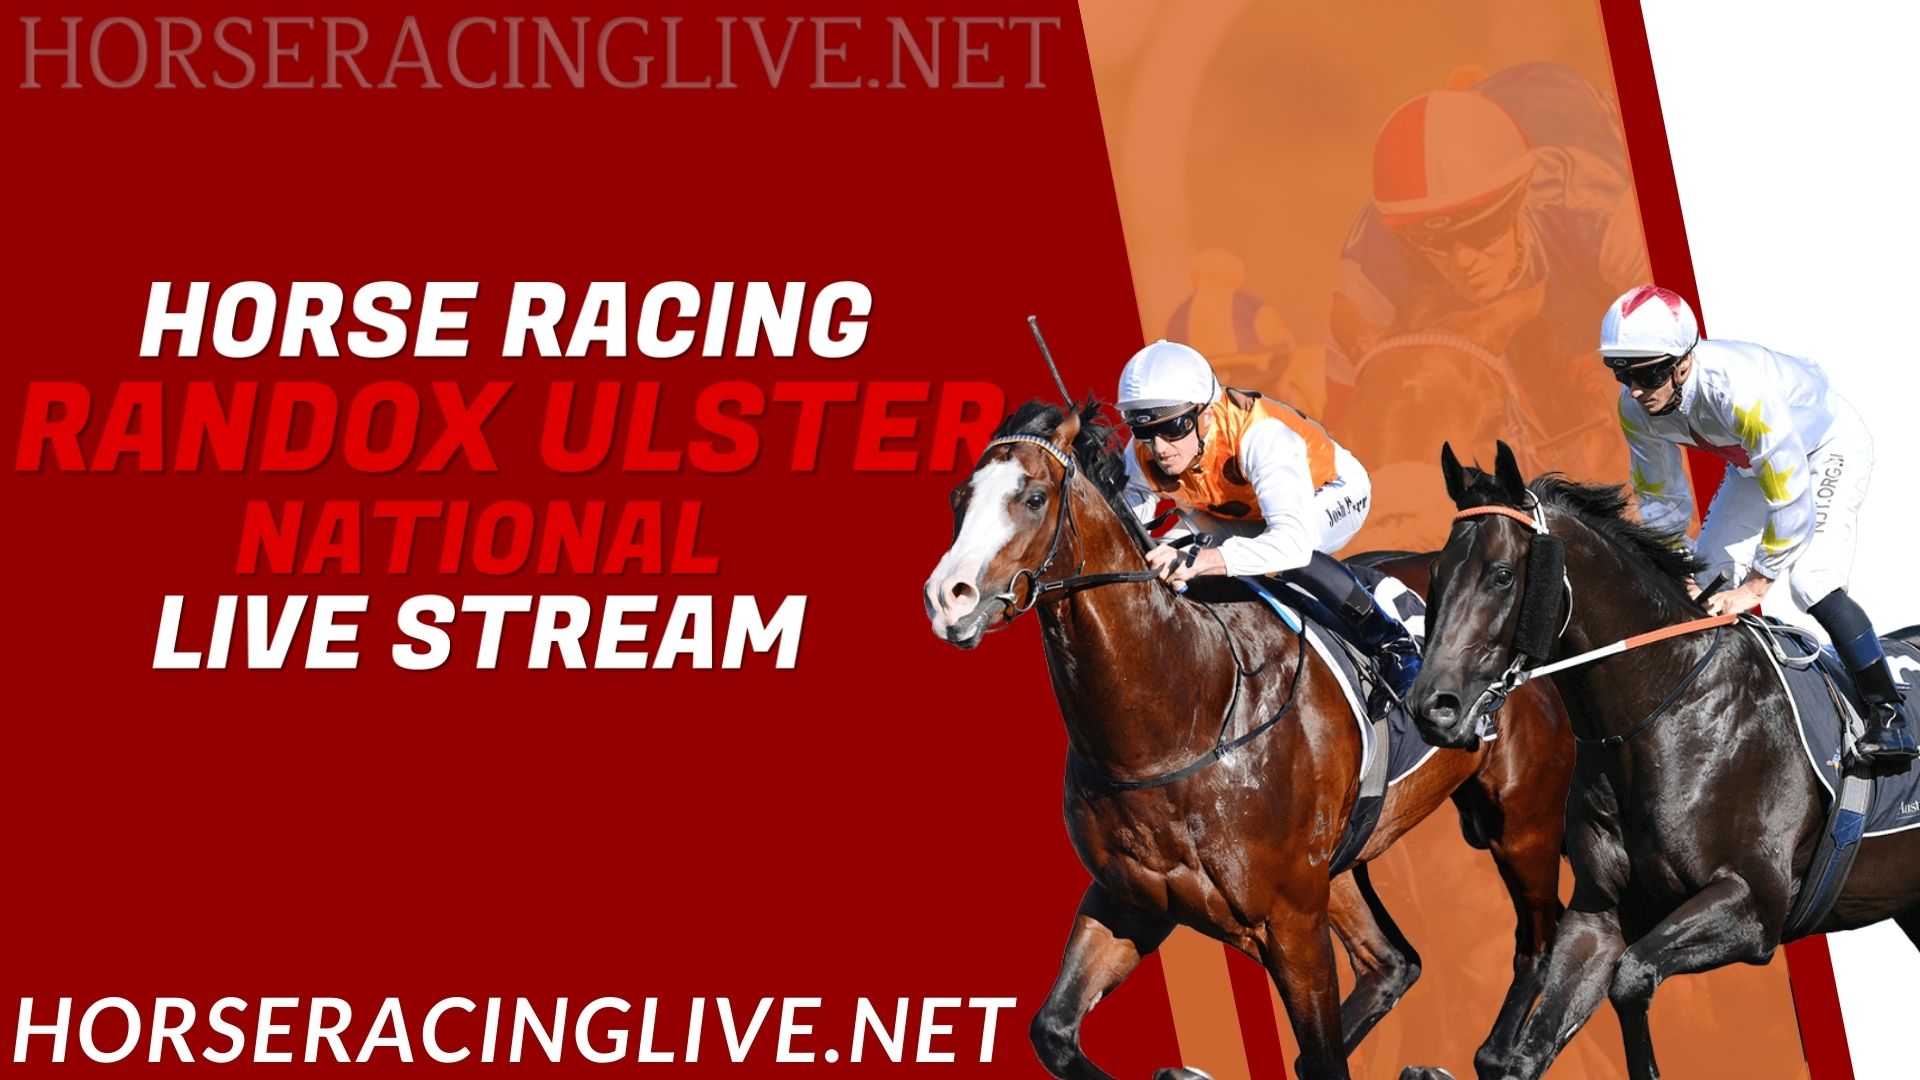 randox-ulster-national-horse-racing-live-stream